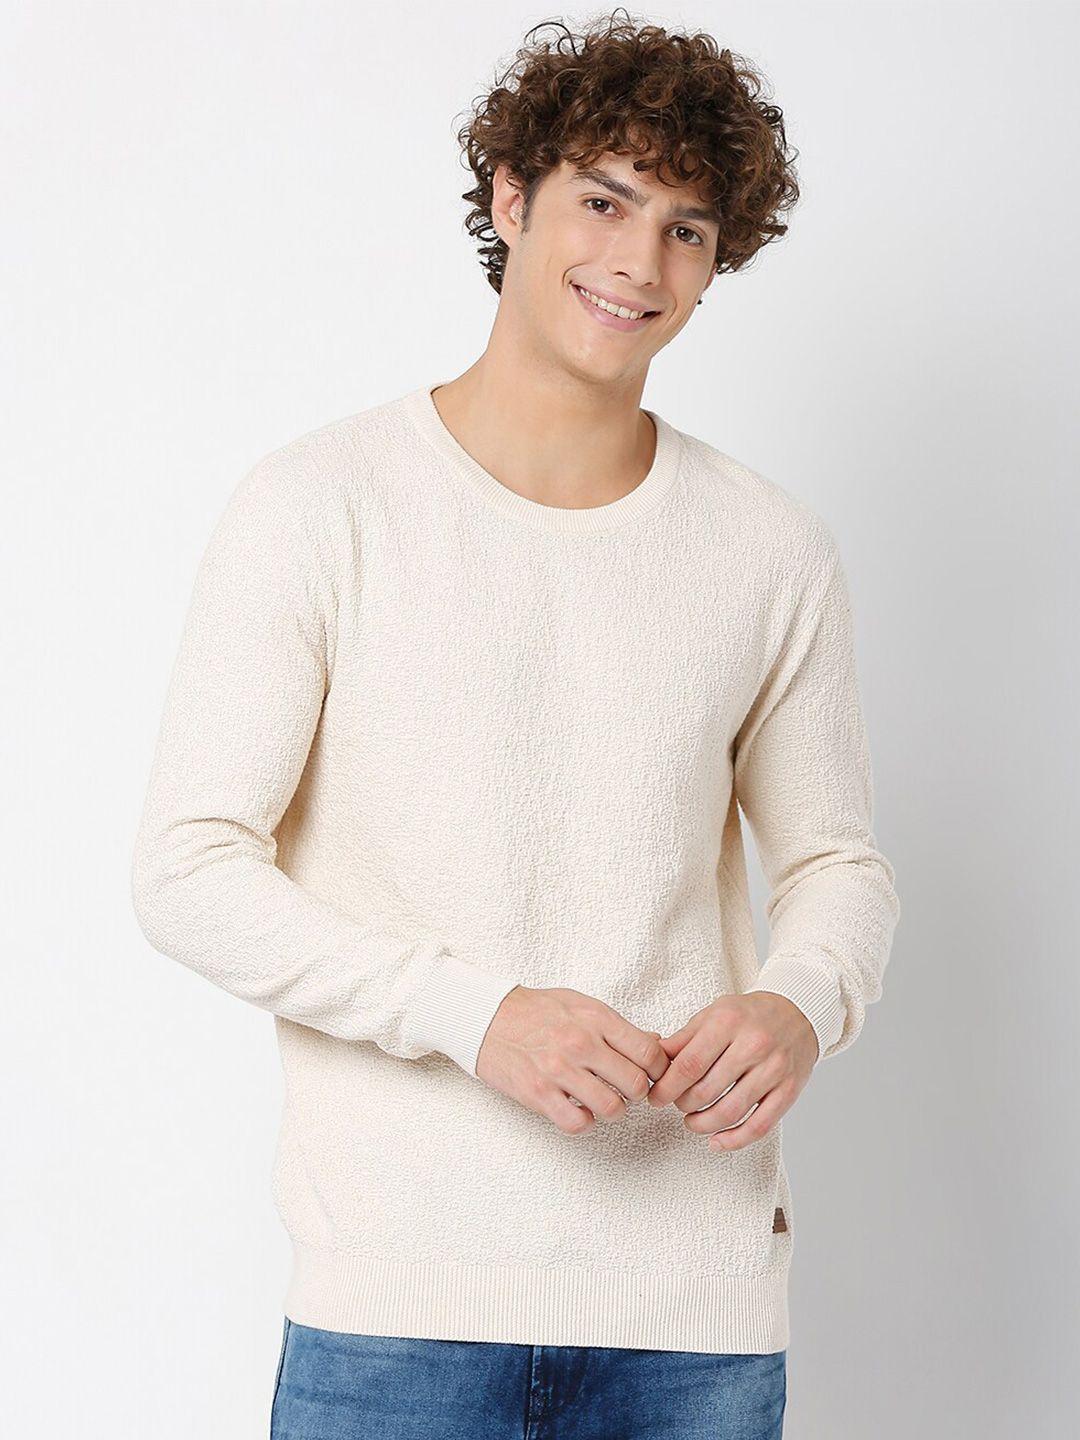 mufti-men-beige-solid-cotton-pullover-sweater